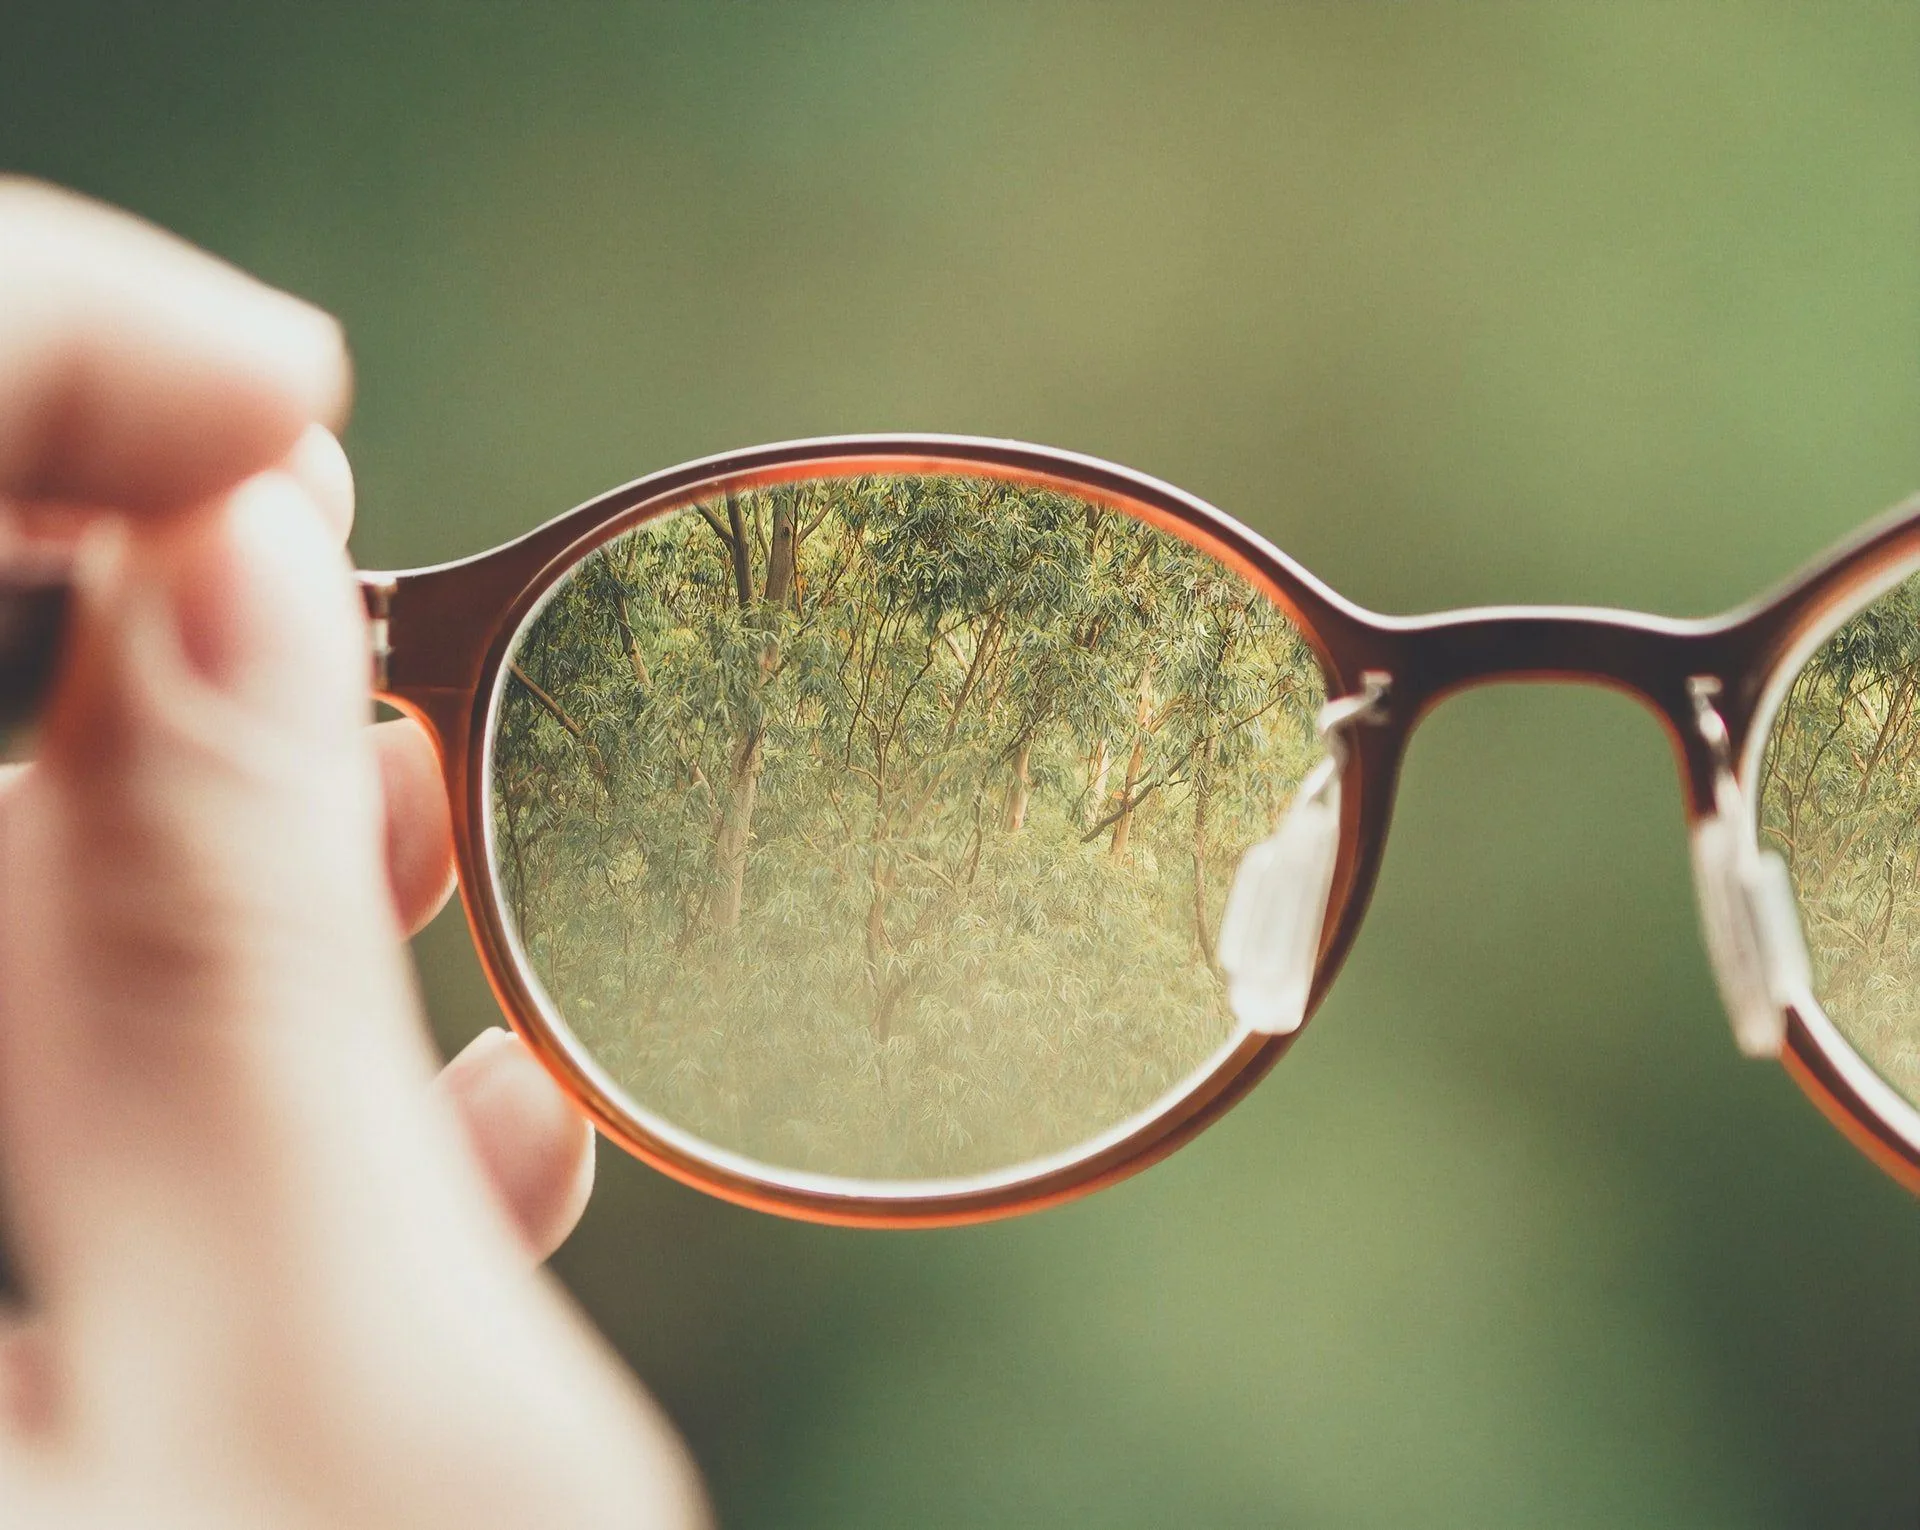 Optometrist Kelly Eekhoud Talks About Improving Your Vision